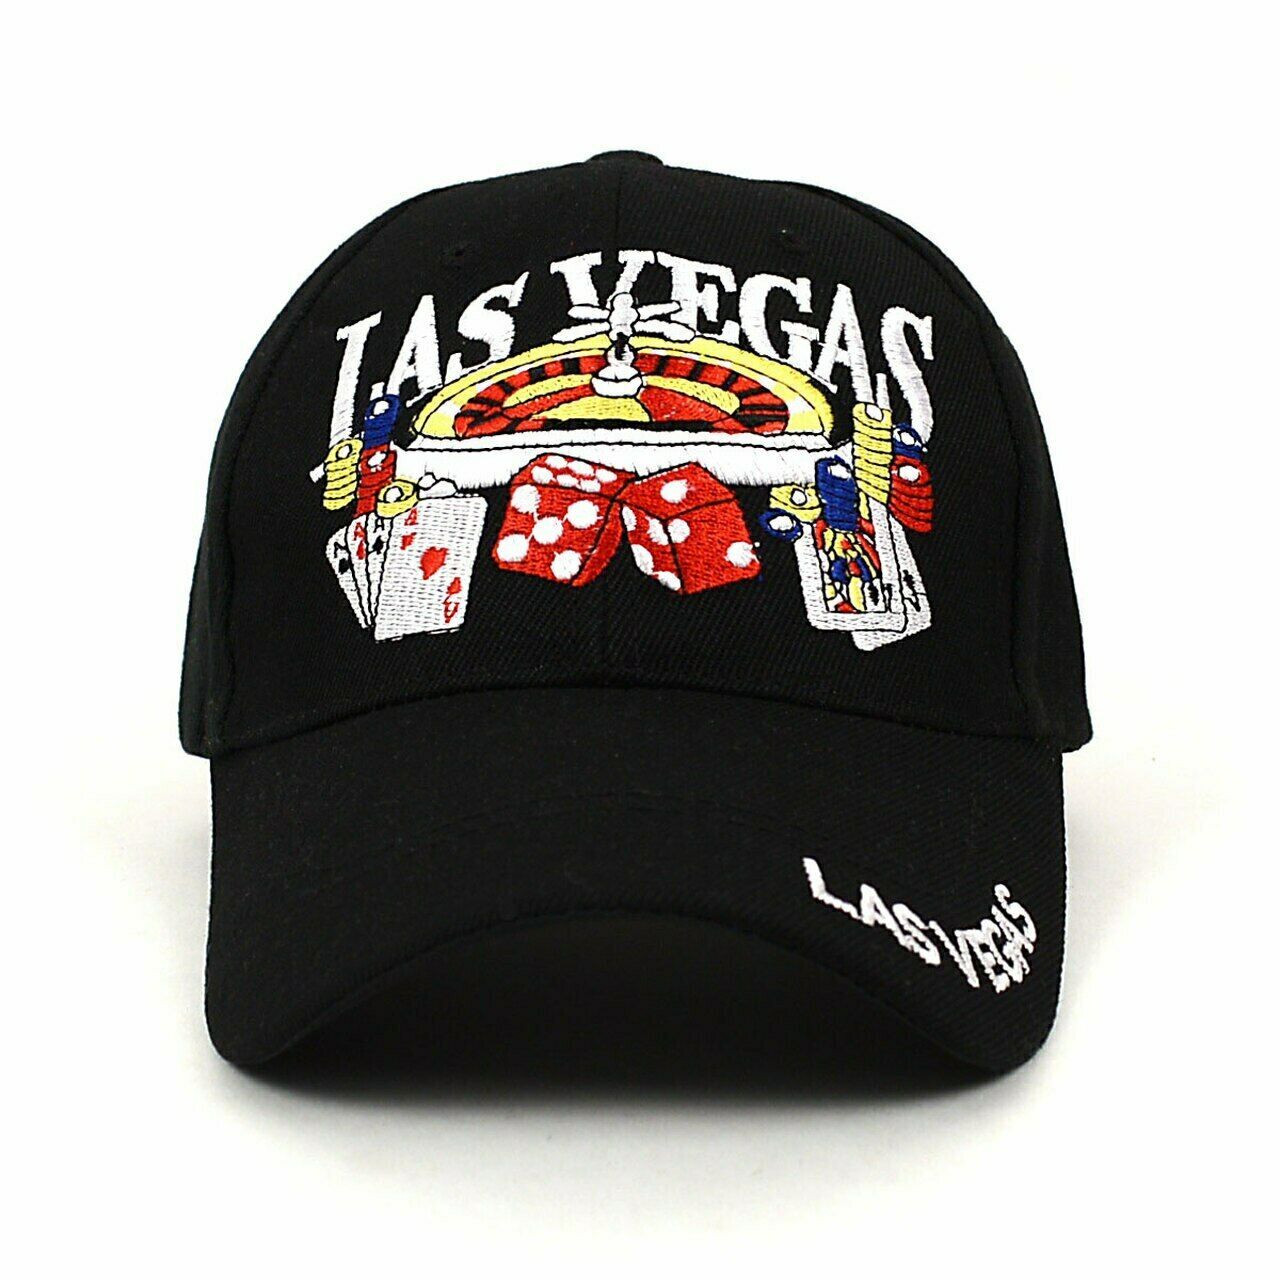 Parquet Men's Baseball Cap Las Vegas Roulette Dice Poker Cards Embroidered New